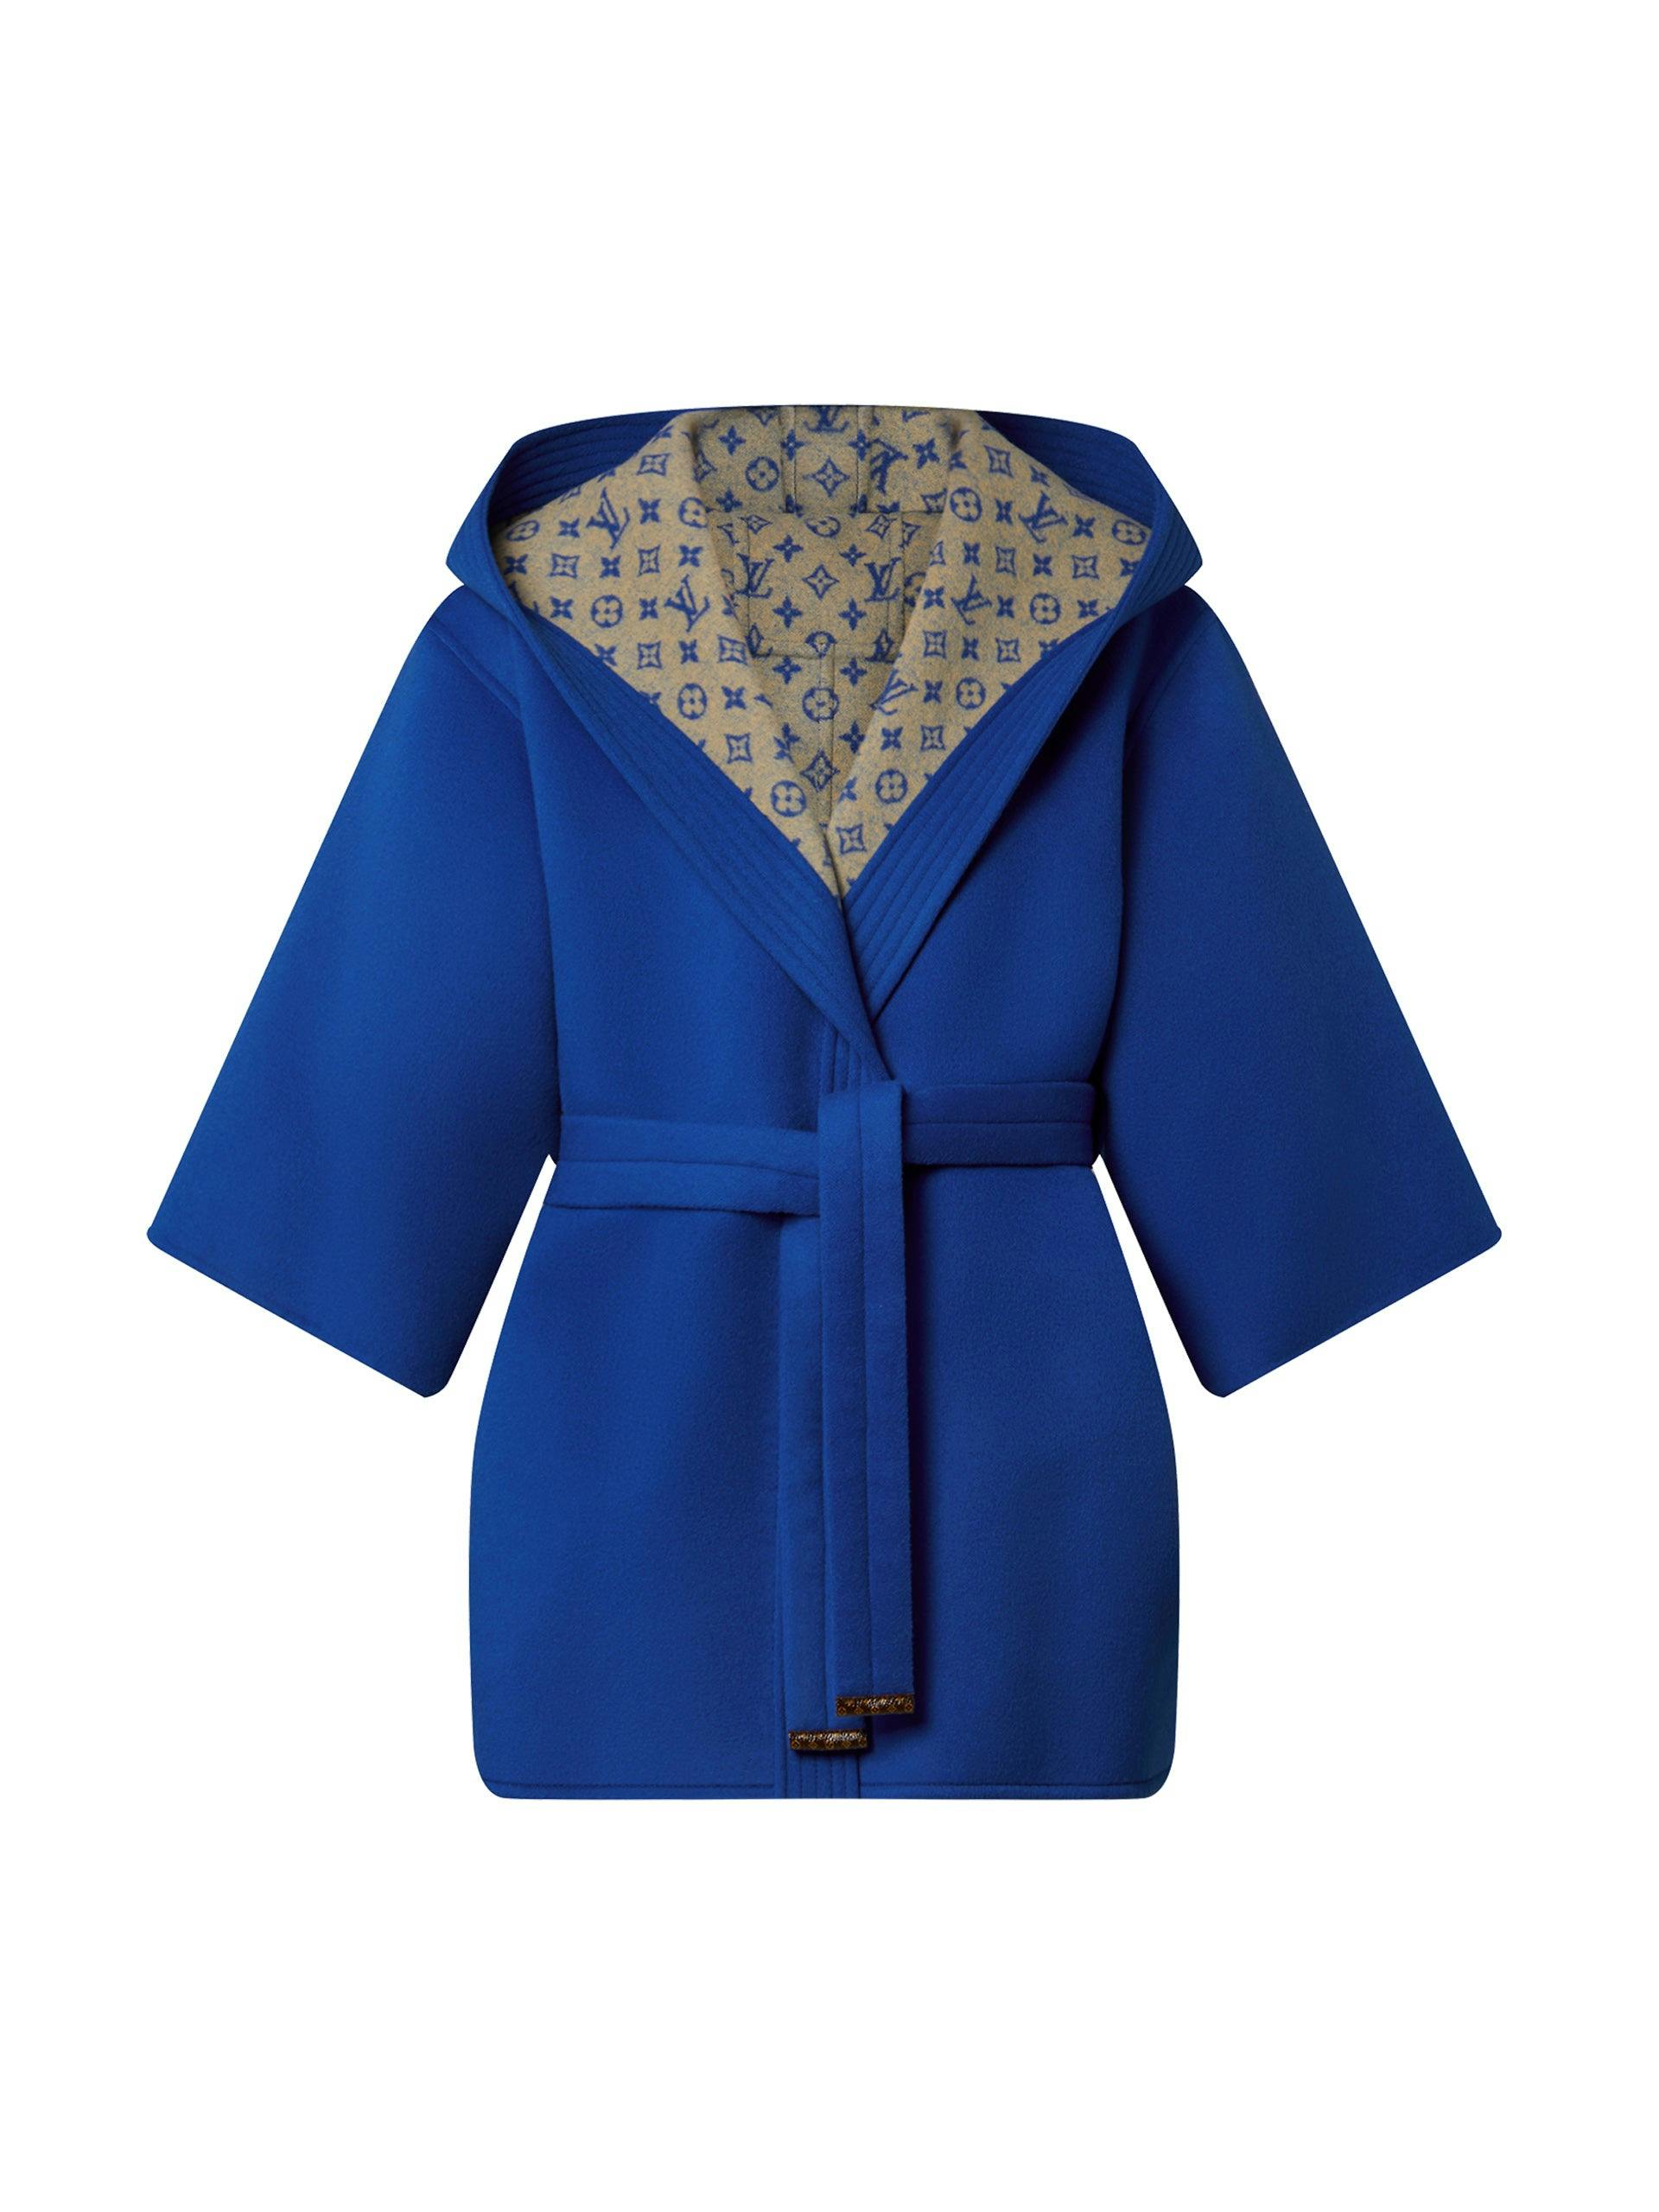 Blue monogrammed robe coat